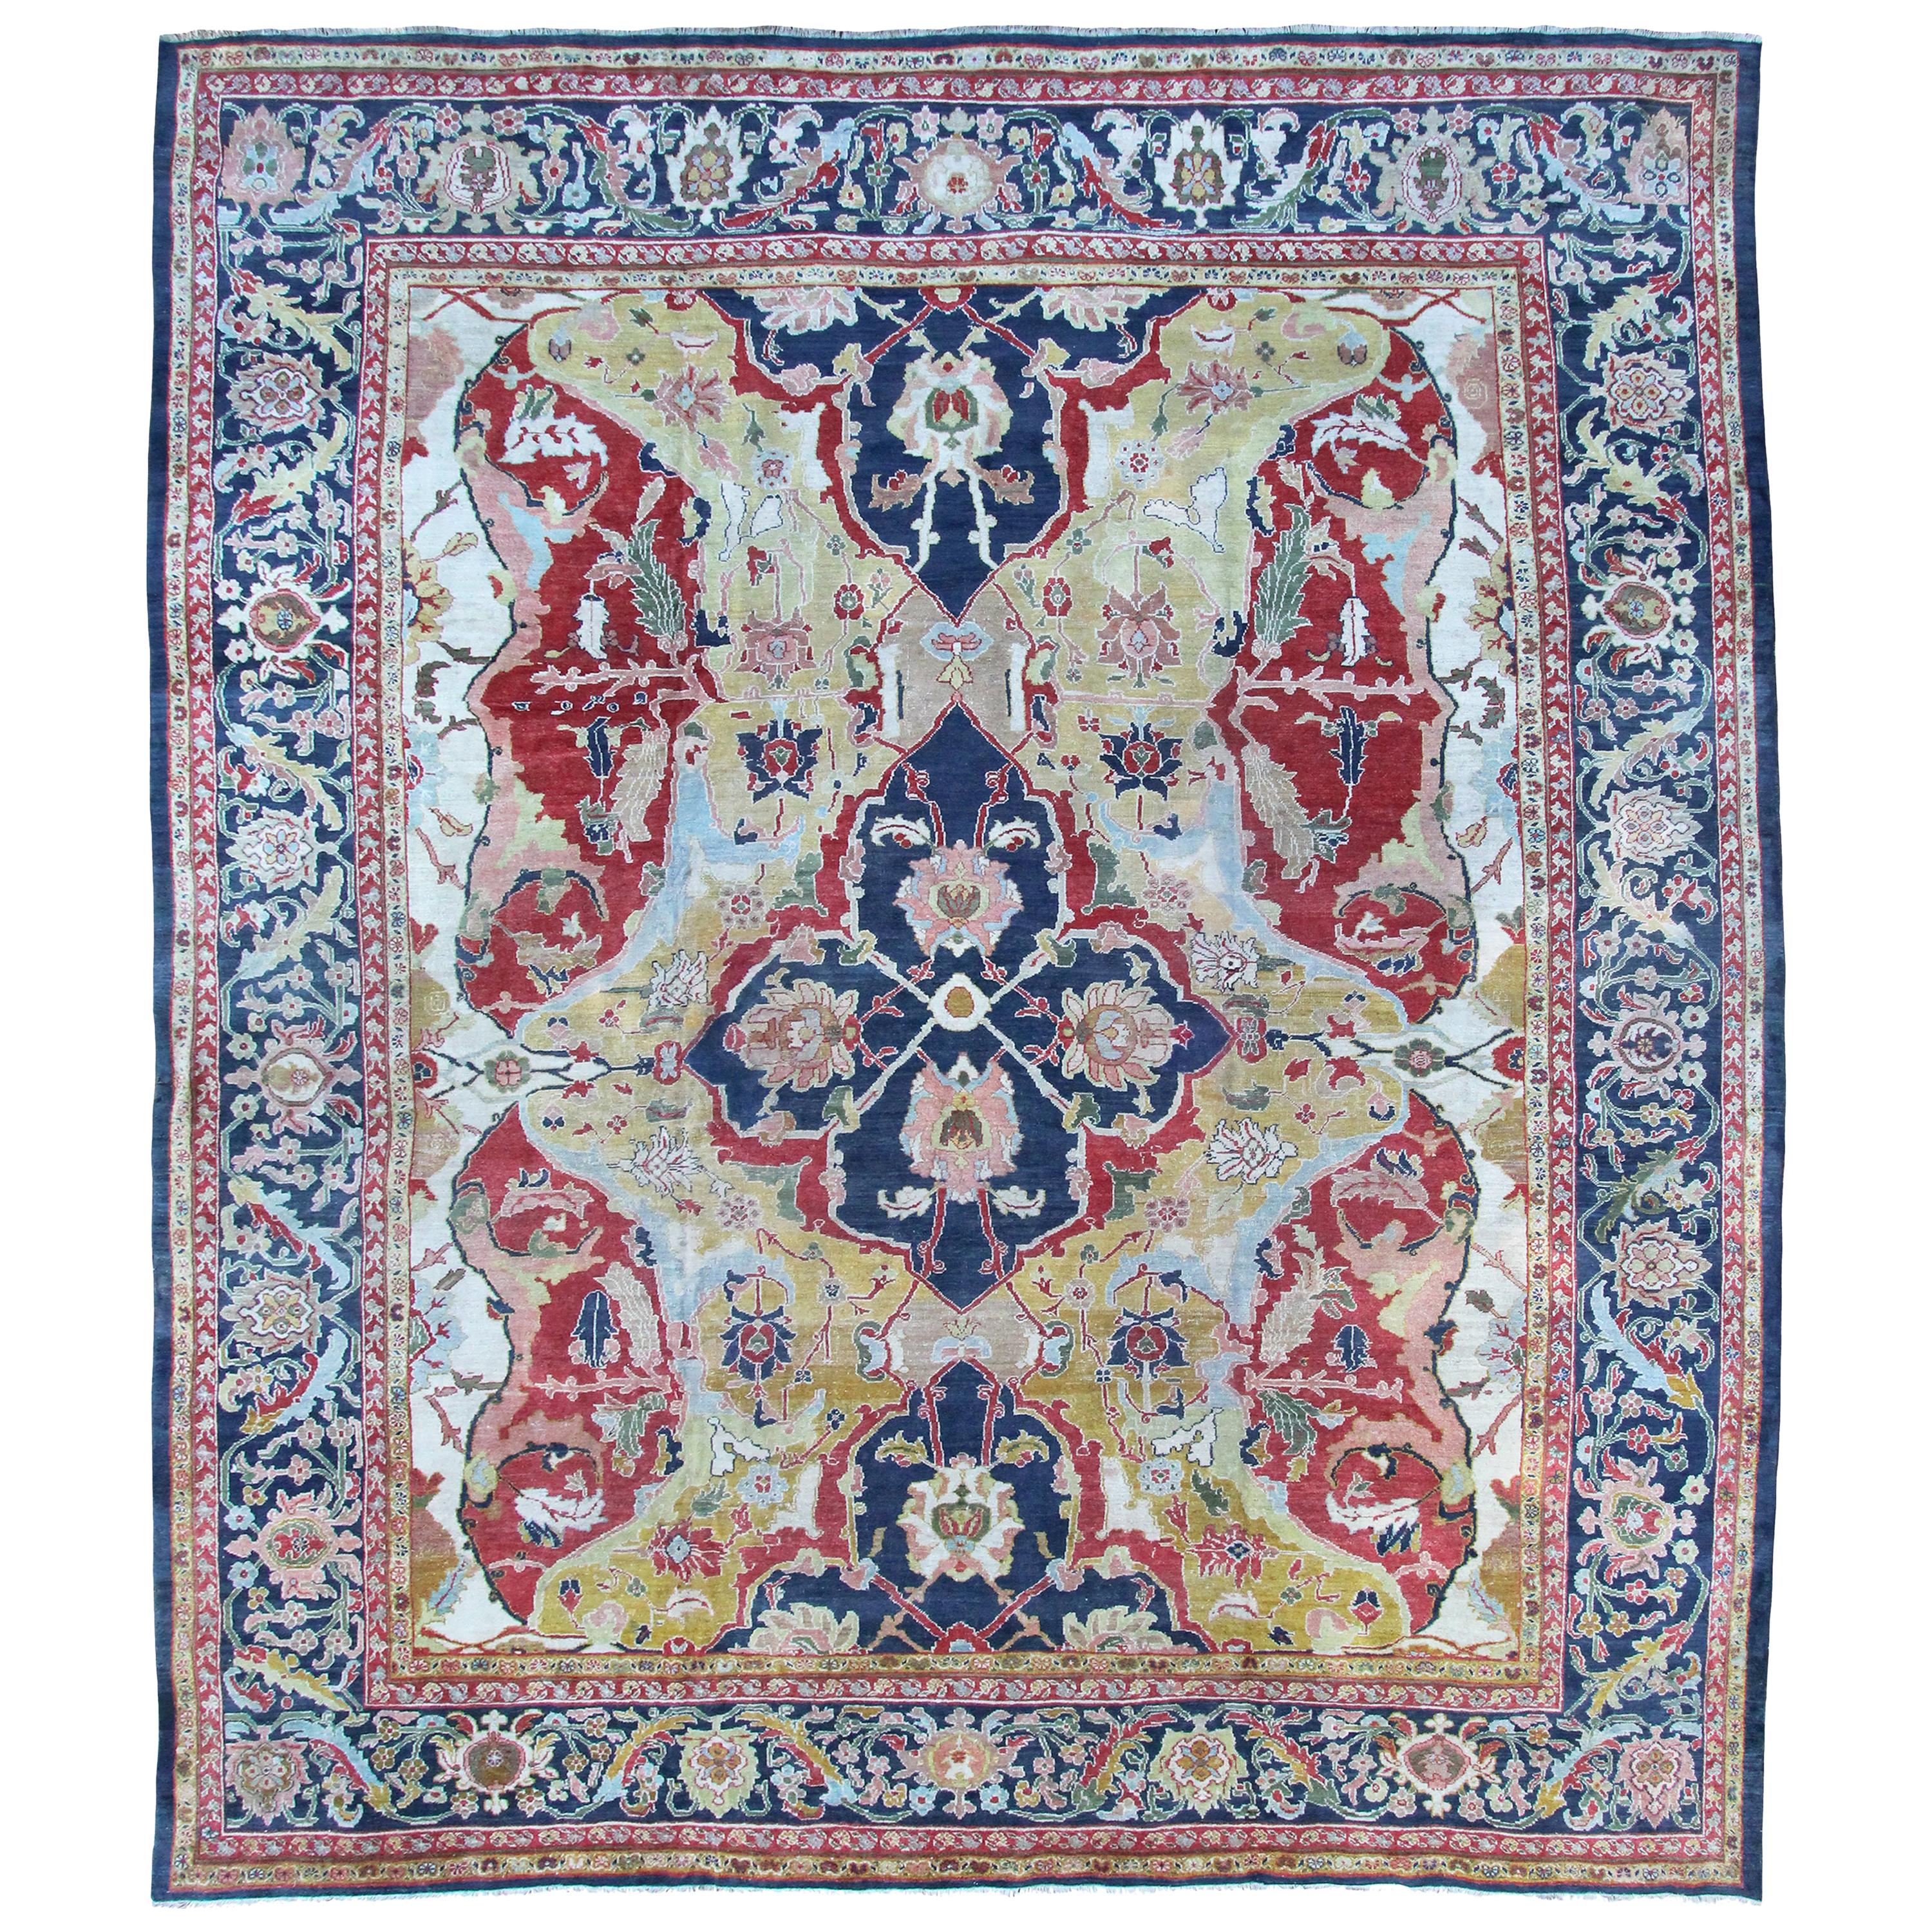 Antique Ziegler Carpet, Rare 17th Century Polonaise Design For Sale